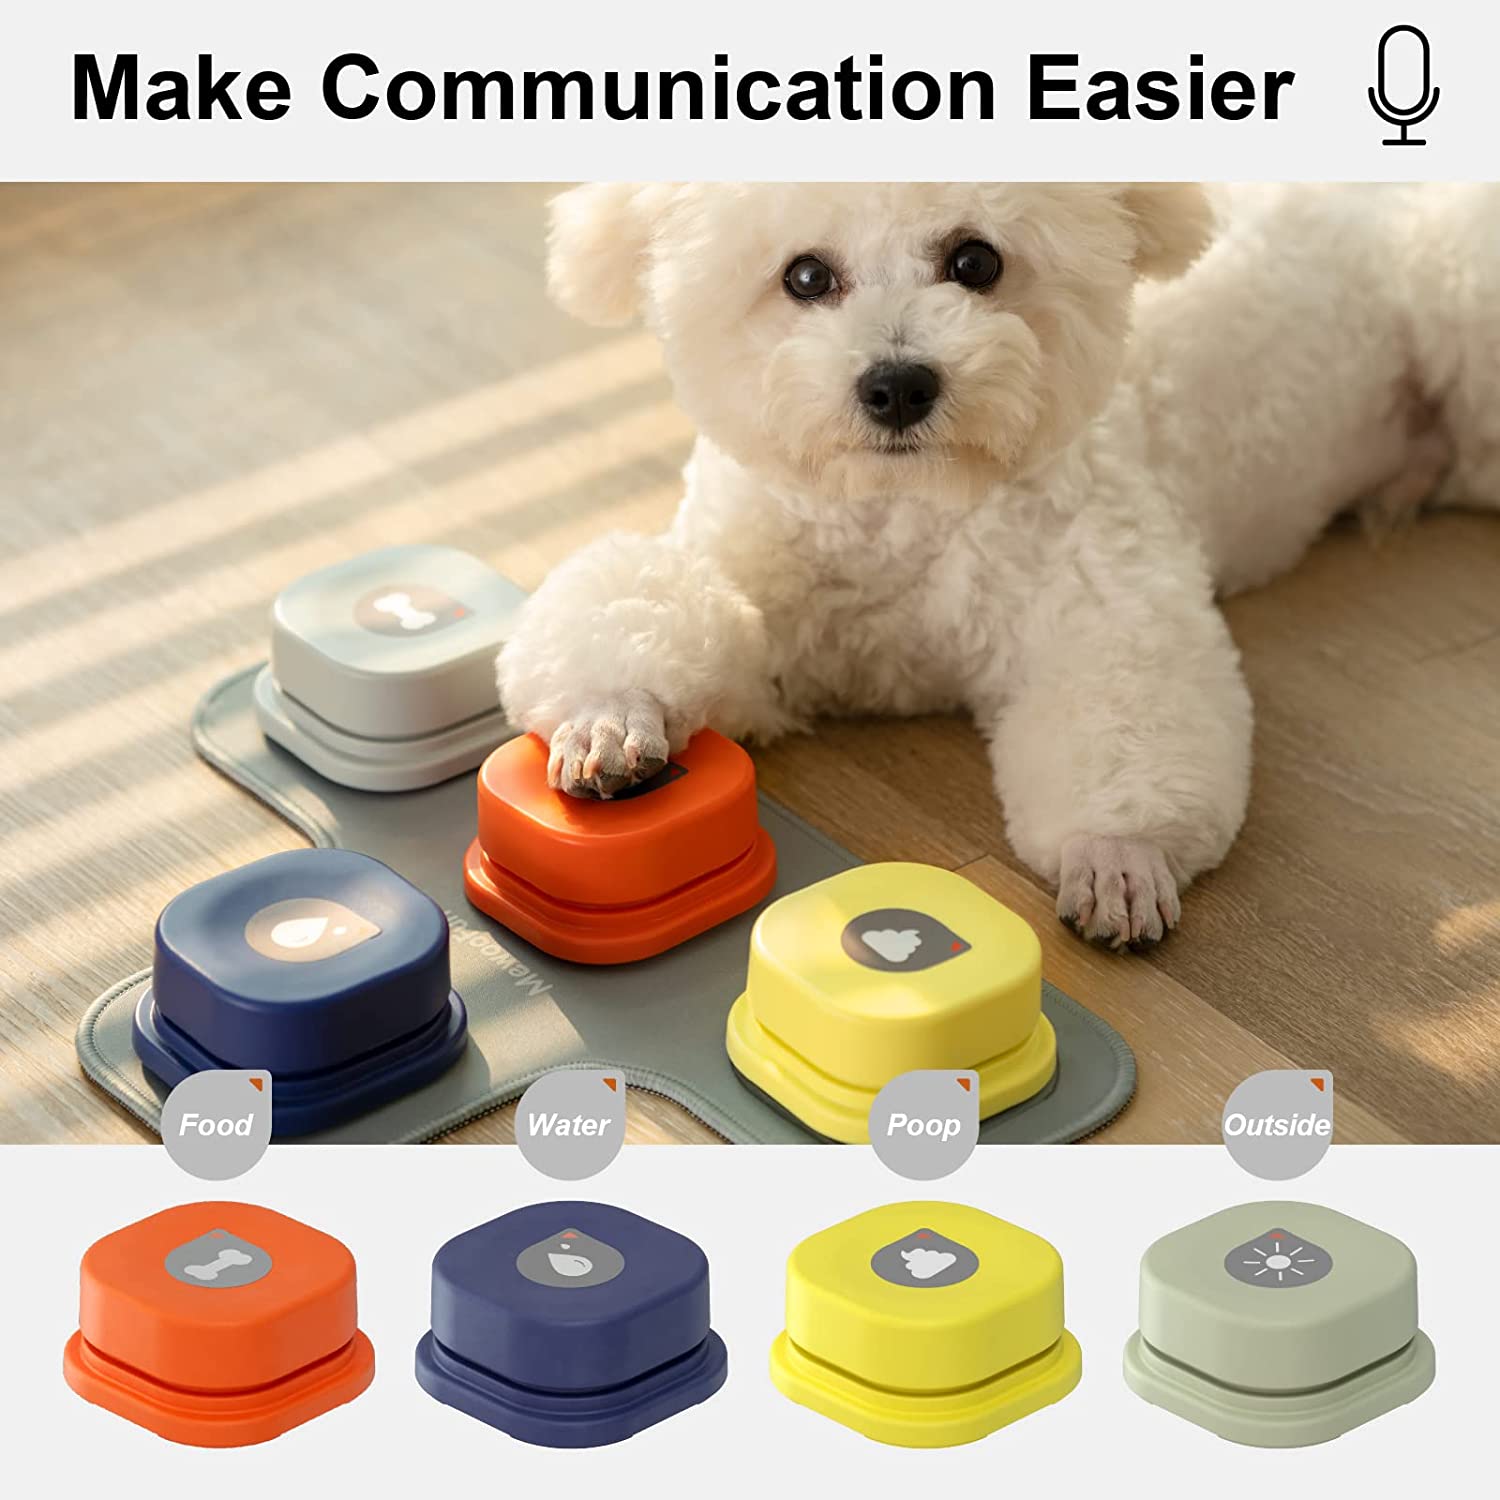 Peouna™ Dog Talking Buttons Set